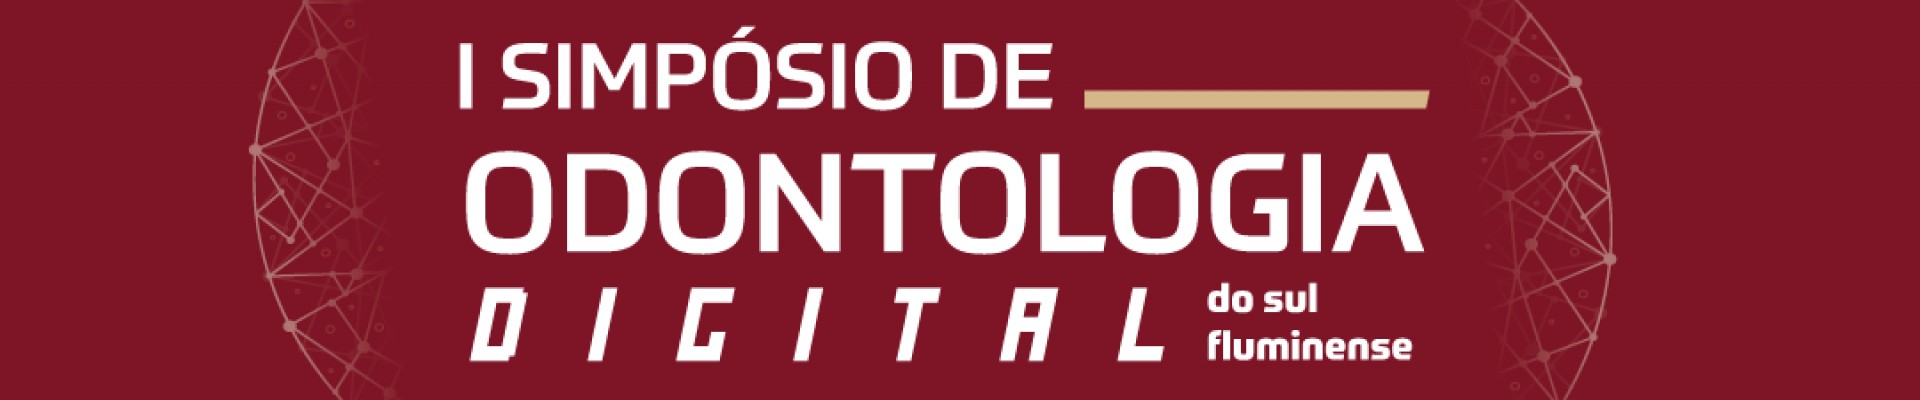 I Simpósio de Odontologia Digital do Sul Fluminense